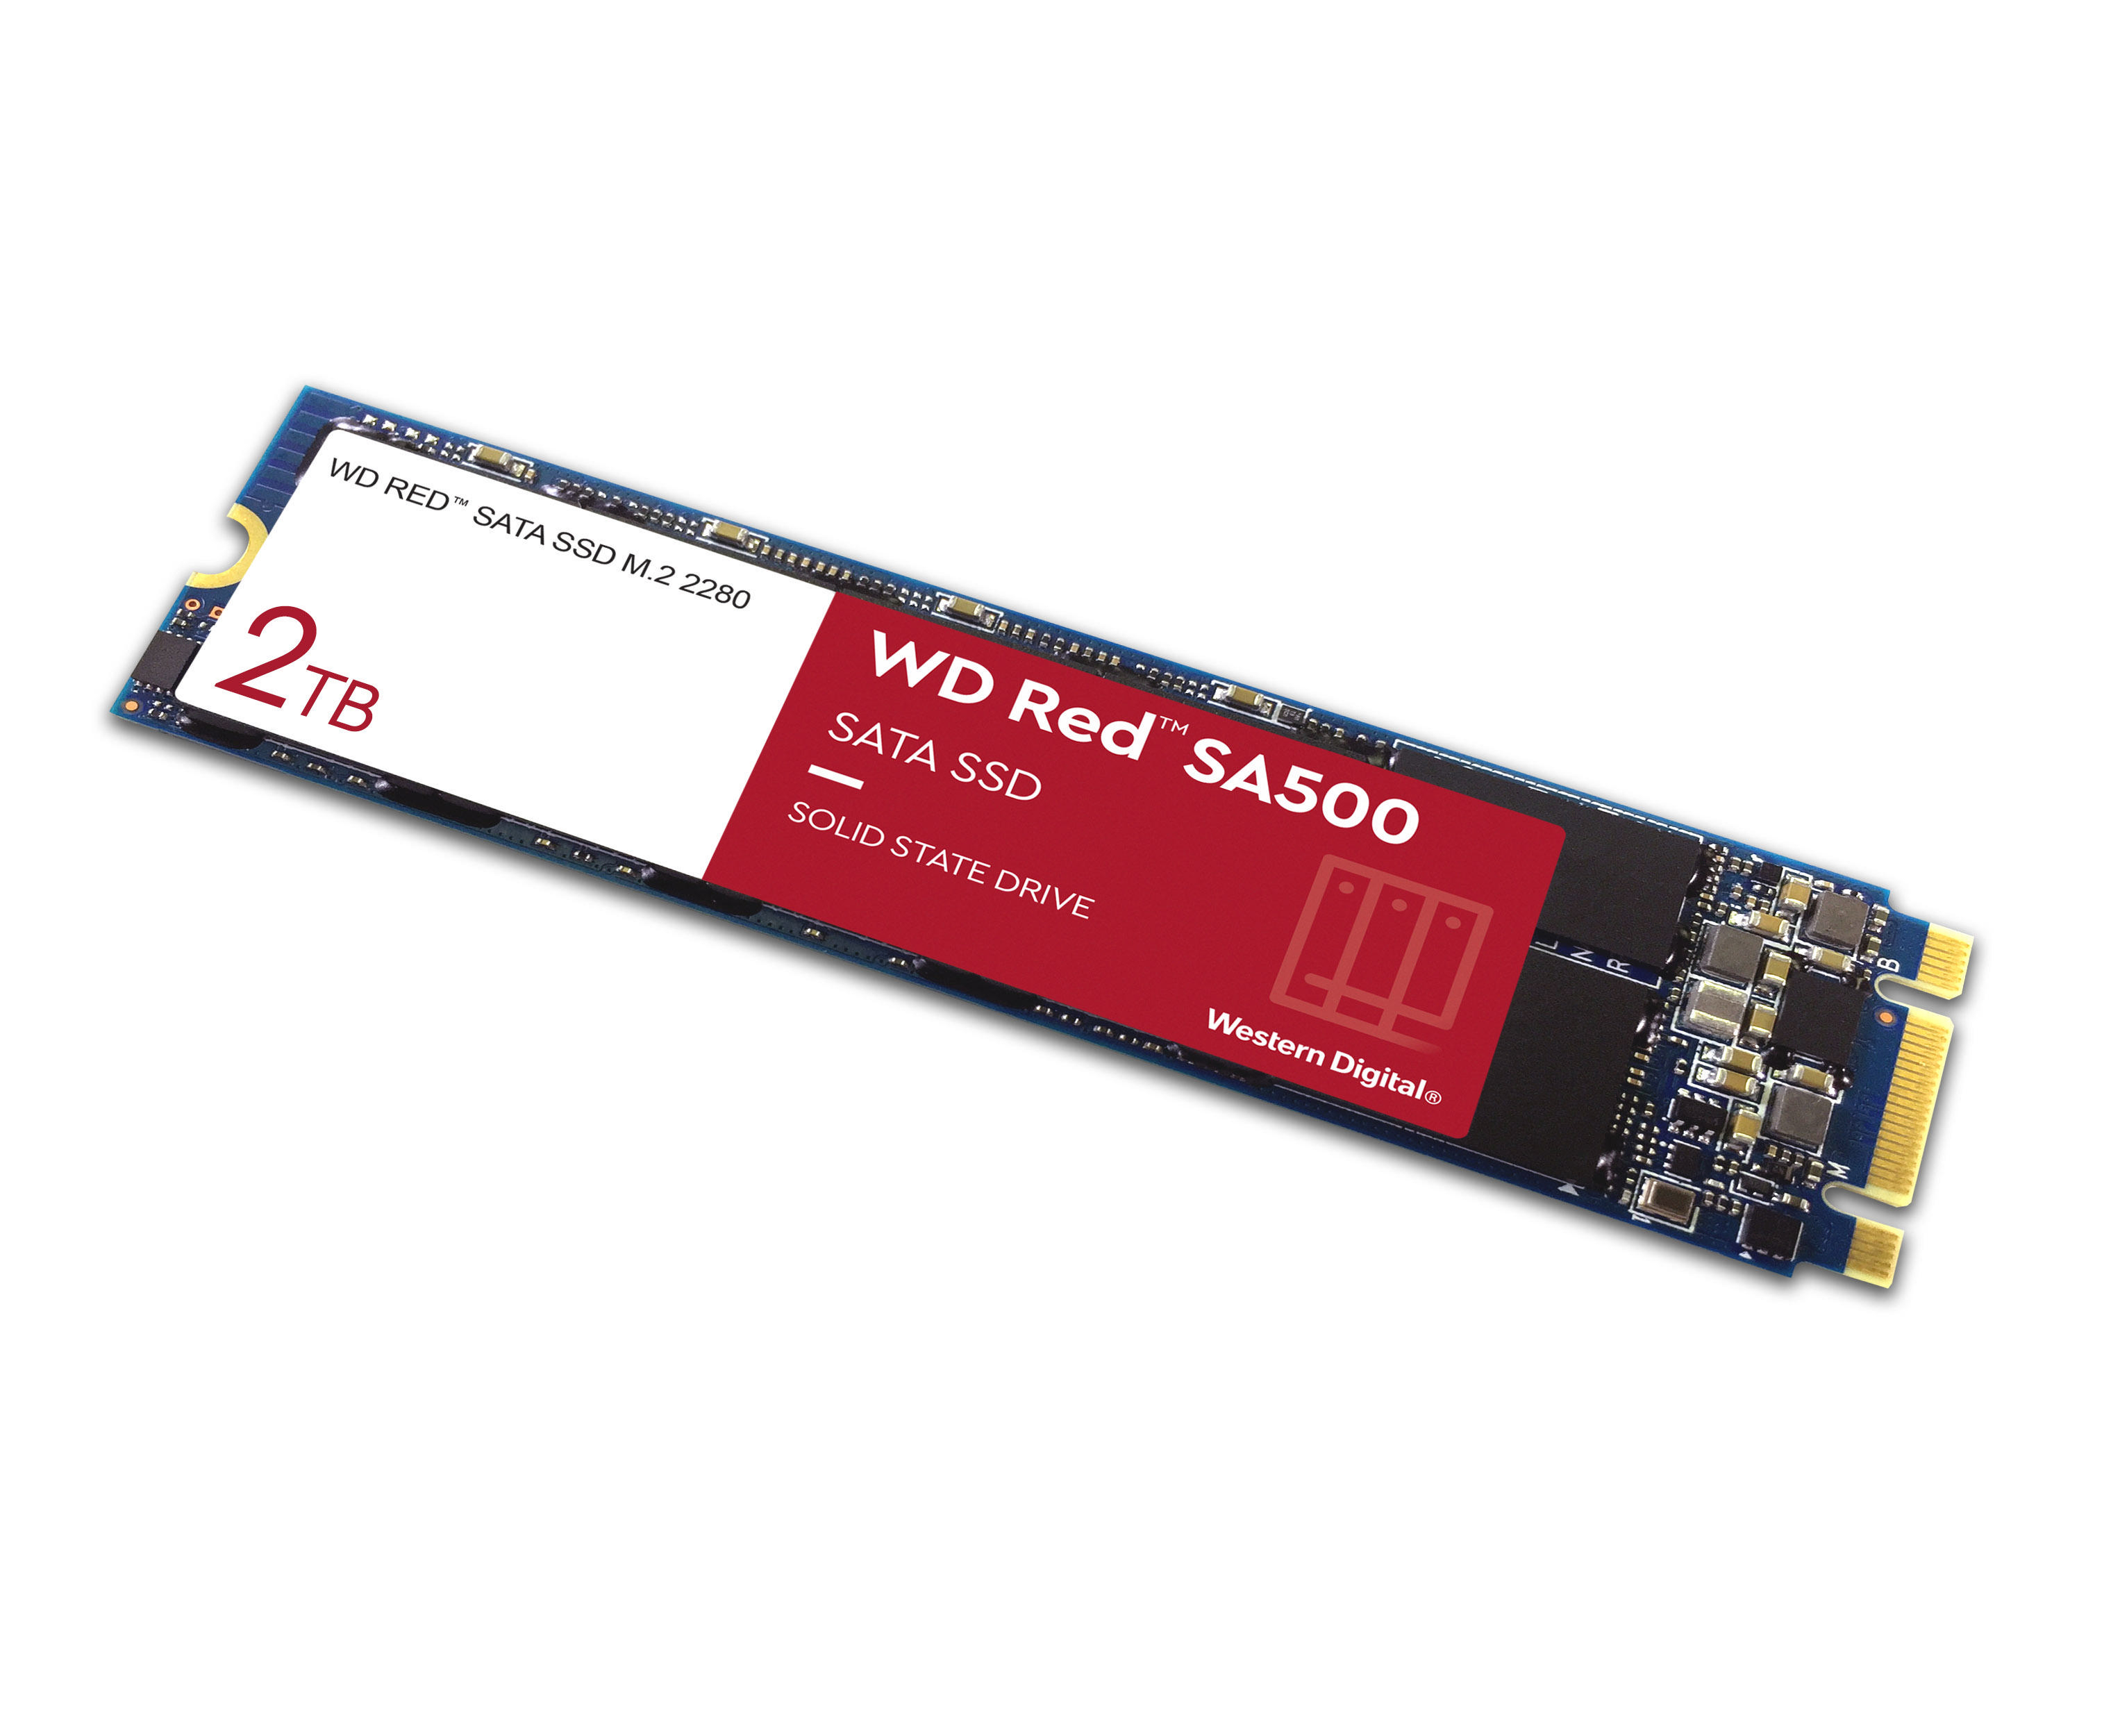 SSD 2 SA500 intern TB Speicher, M.2 WD via Red™ SATA,